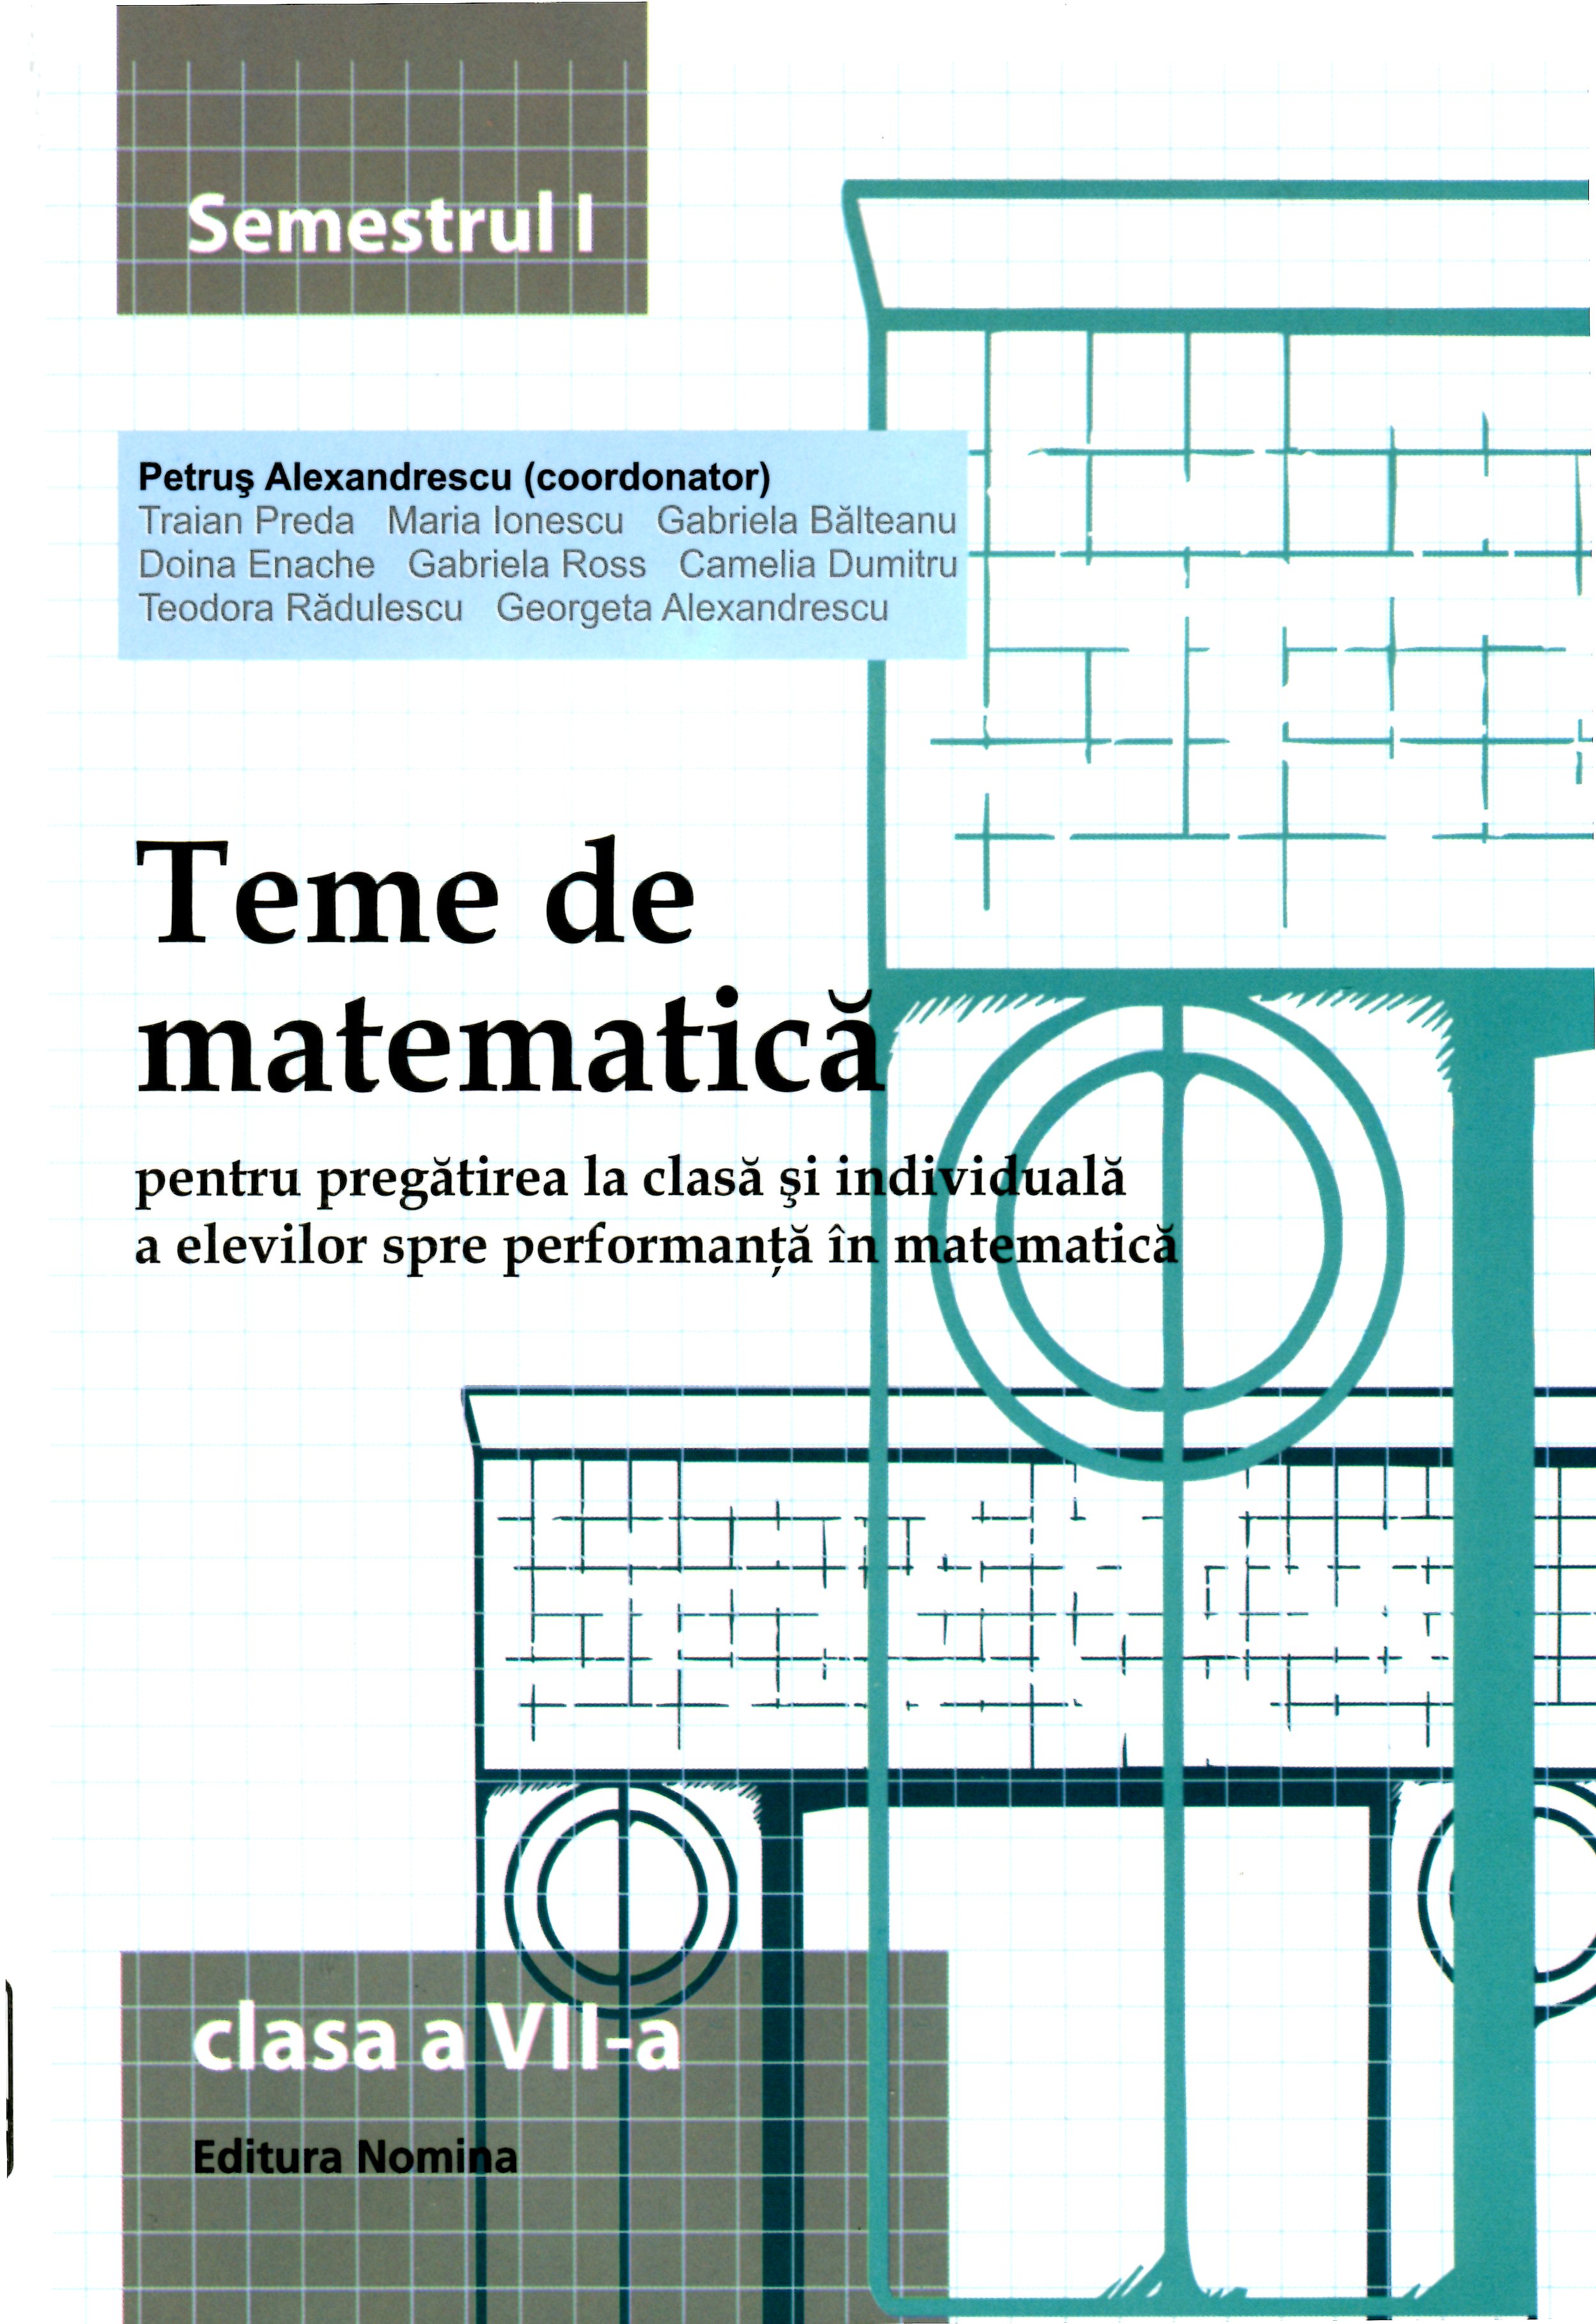 2014 Teme De Matematica Cls 7 Sem. 1 - Petrus Alexandrescu